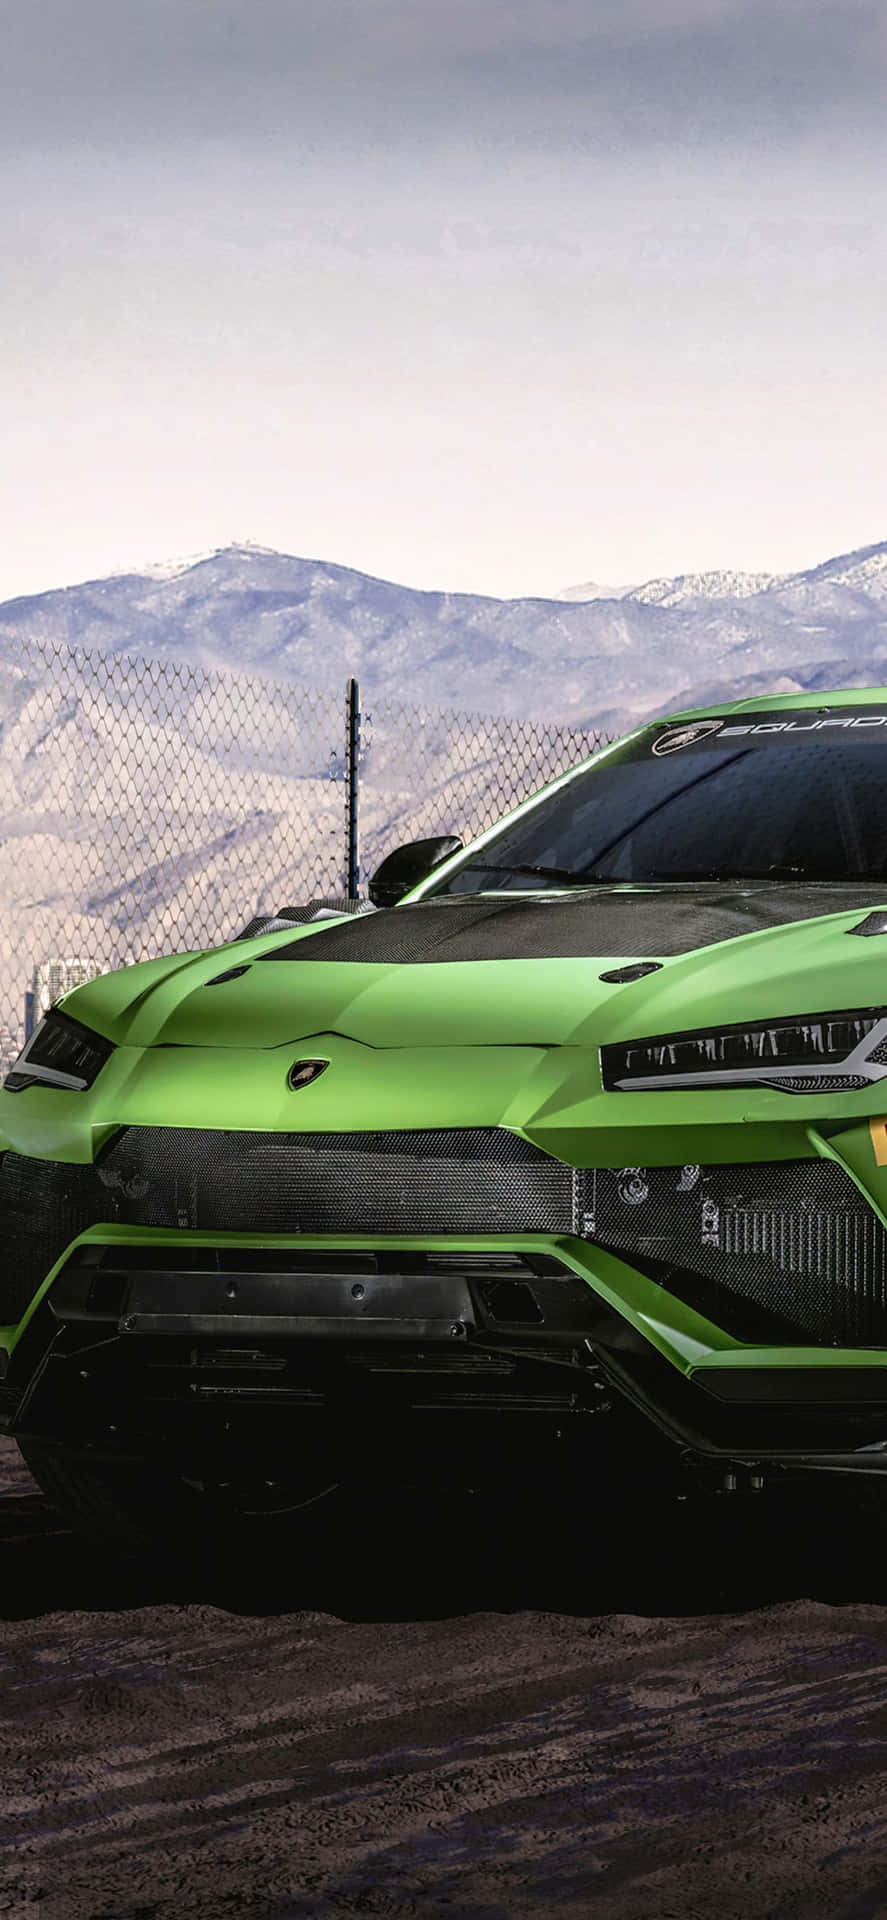 Feel the power of driving a green Lamborghini Wallpaper